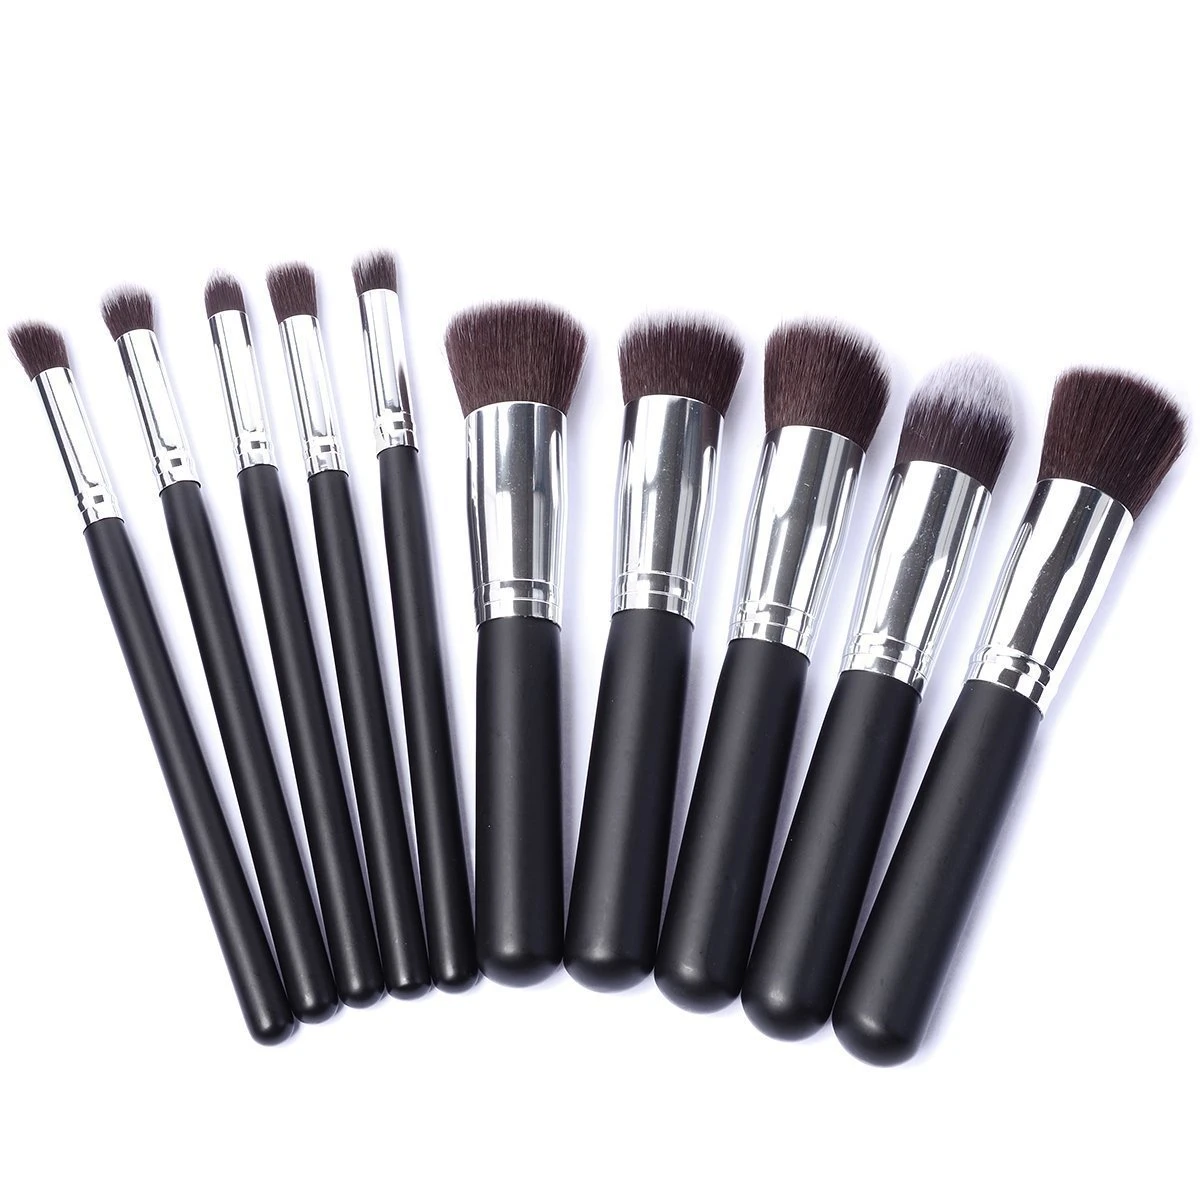 10 PCS Makeup Brushes Eyeshadow Rouge Lipstick Liquid Foundation Brushes Cosmetic Tools Soft Natural-synthetic Hair Brush Kits